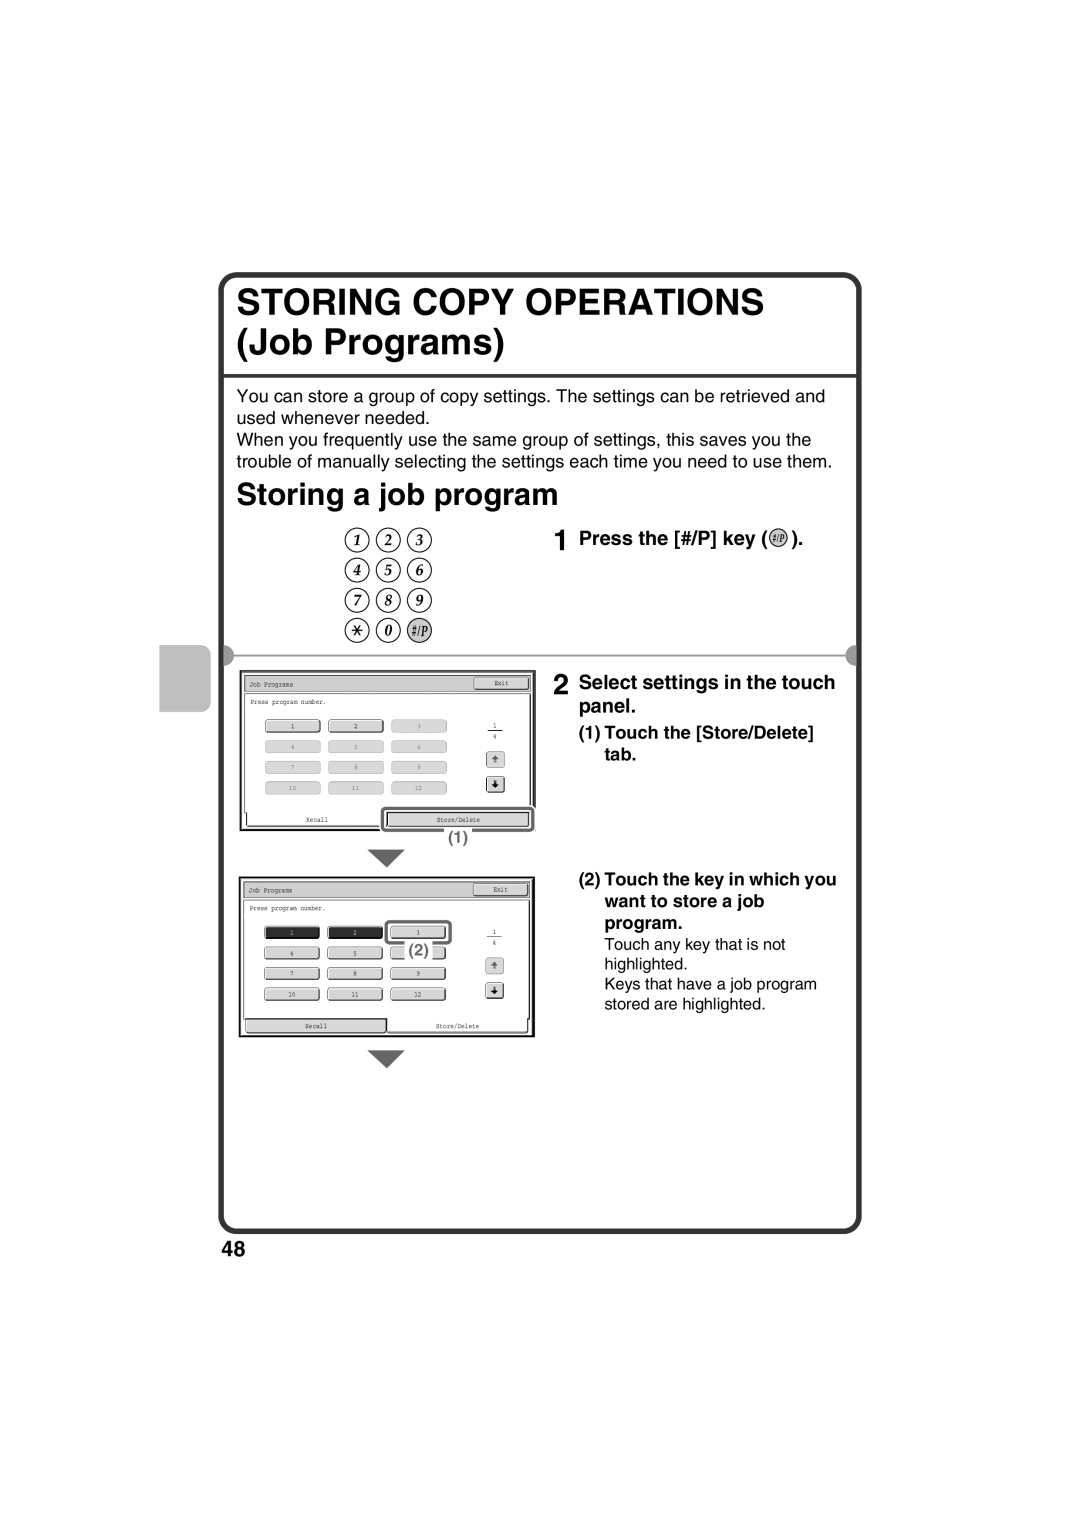 Sharp MX-C311 STORING COPY OPERATIONS Job Programs, Storing a job program, Press the #/P key, Touch the Store/Delete tab 